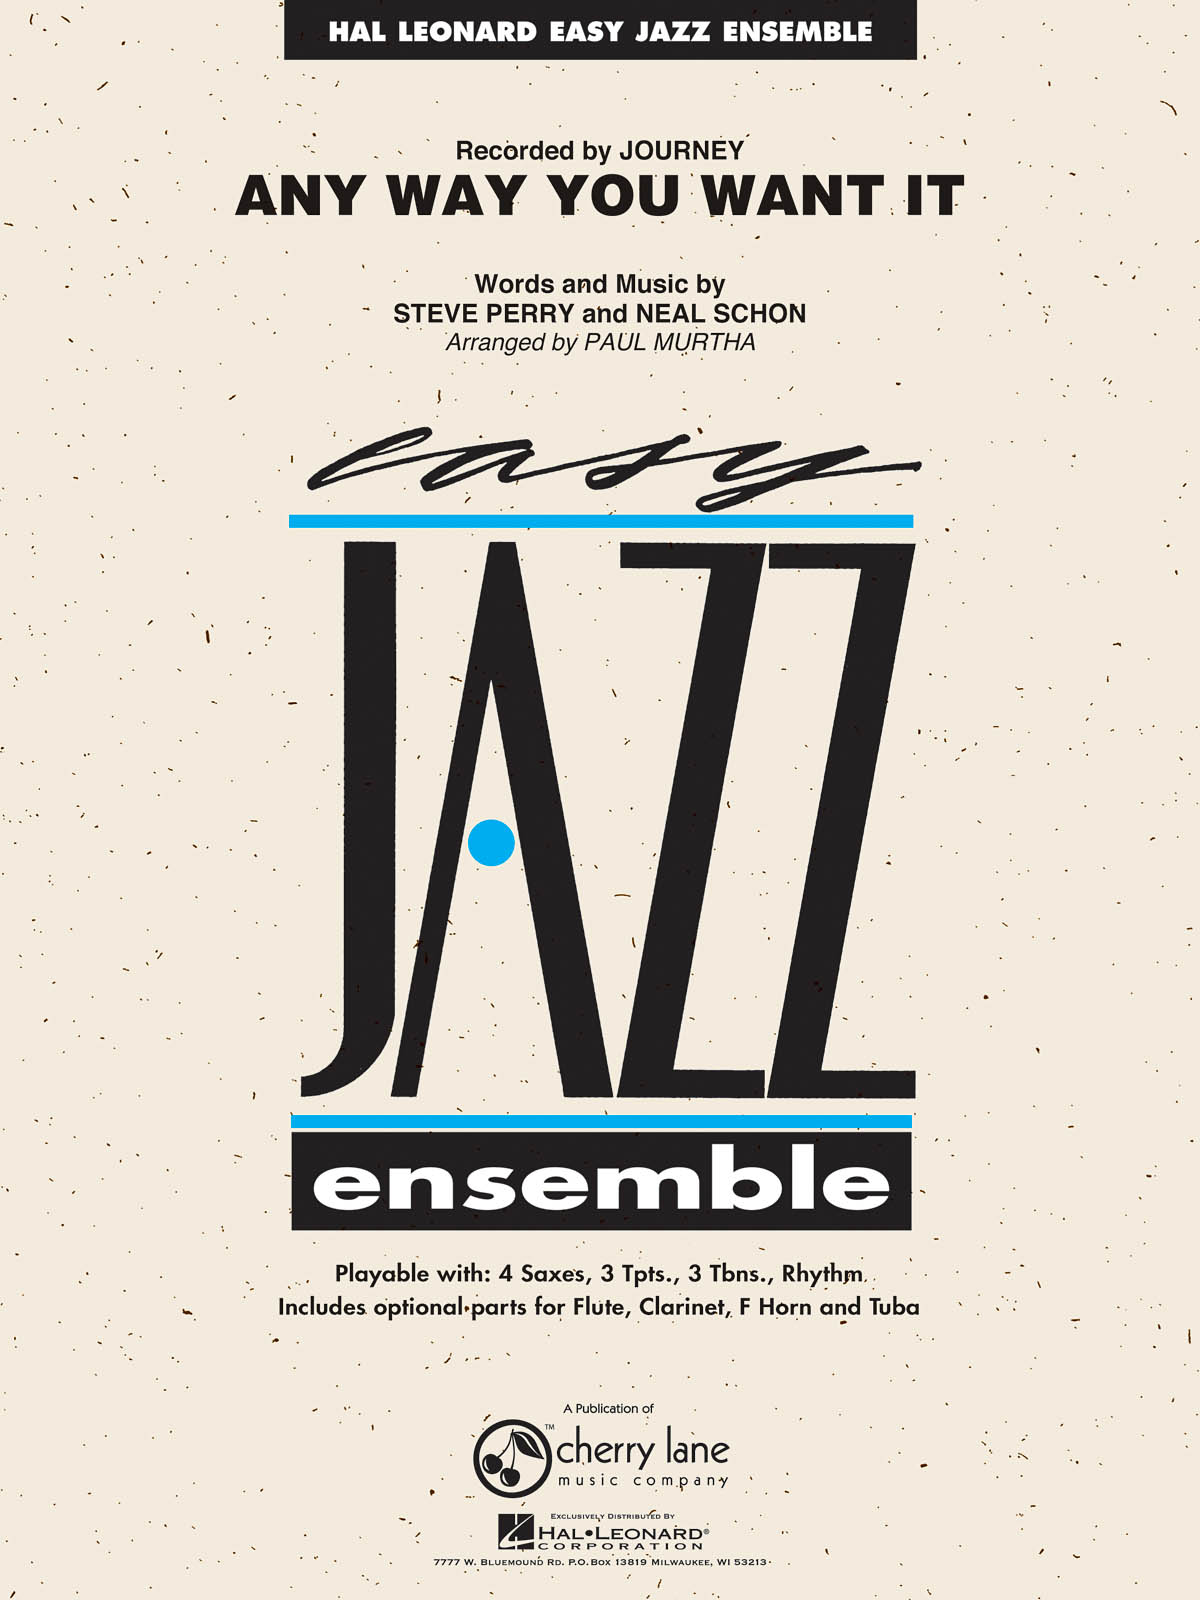 Neal Schon: Any Way You Want It: Jazz Ensemble: Score